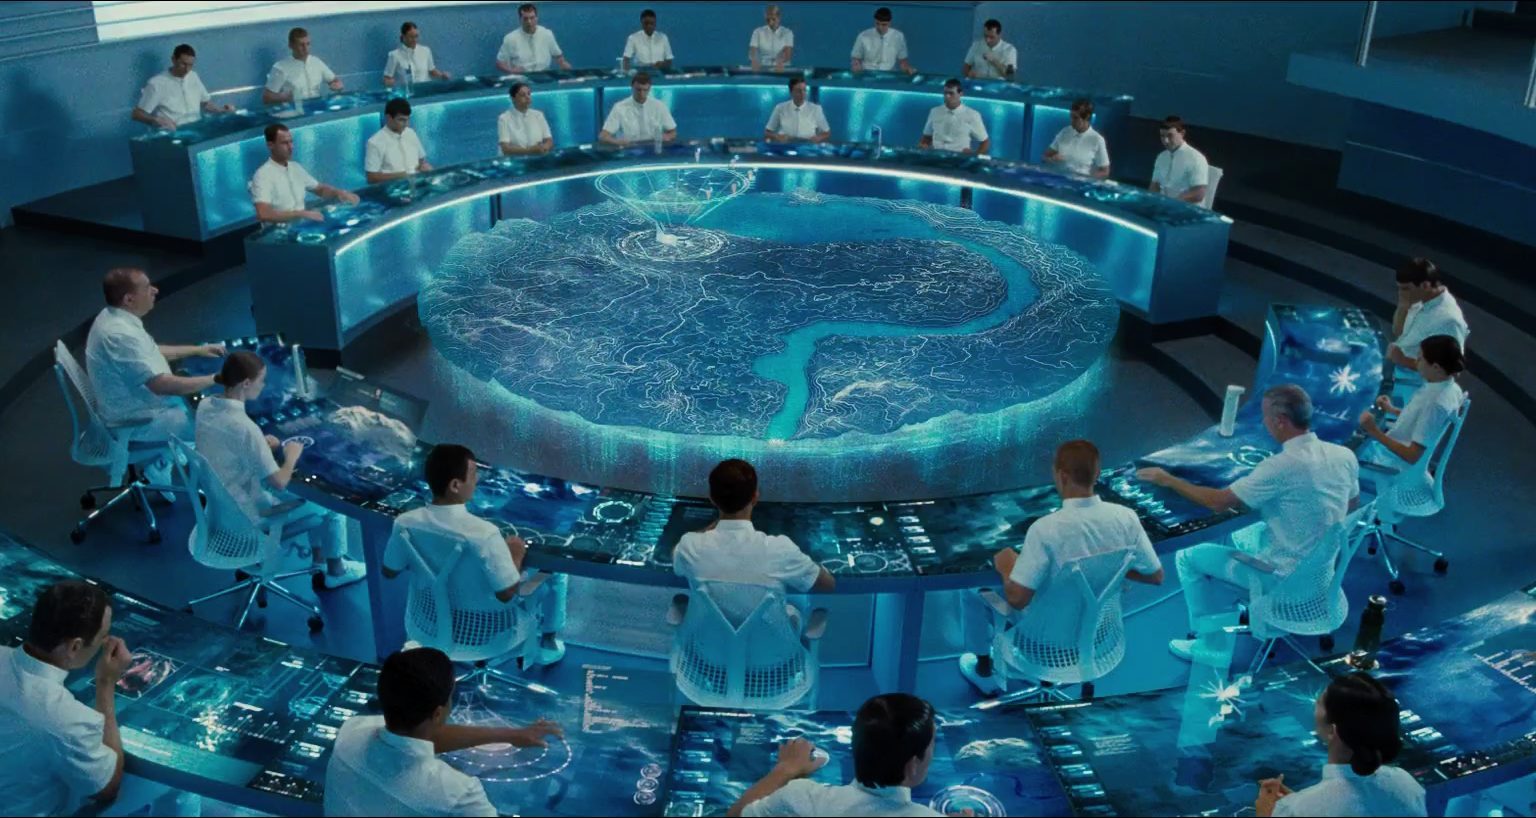 "Hunger Games Control Room". Capture d'écran du film "Hunger Games" (Gary Ross, 2012) prise sur Pinterest. URL : https://www.pinterest.com/pin/369717450631340043/